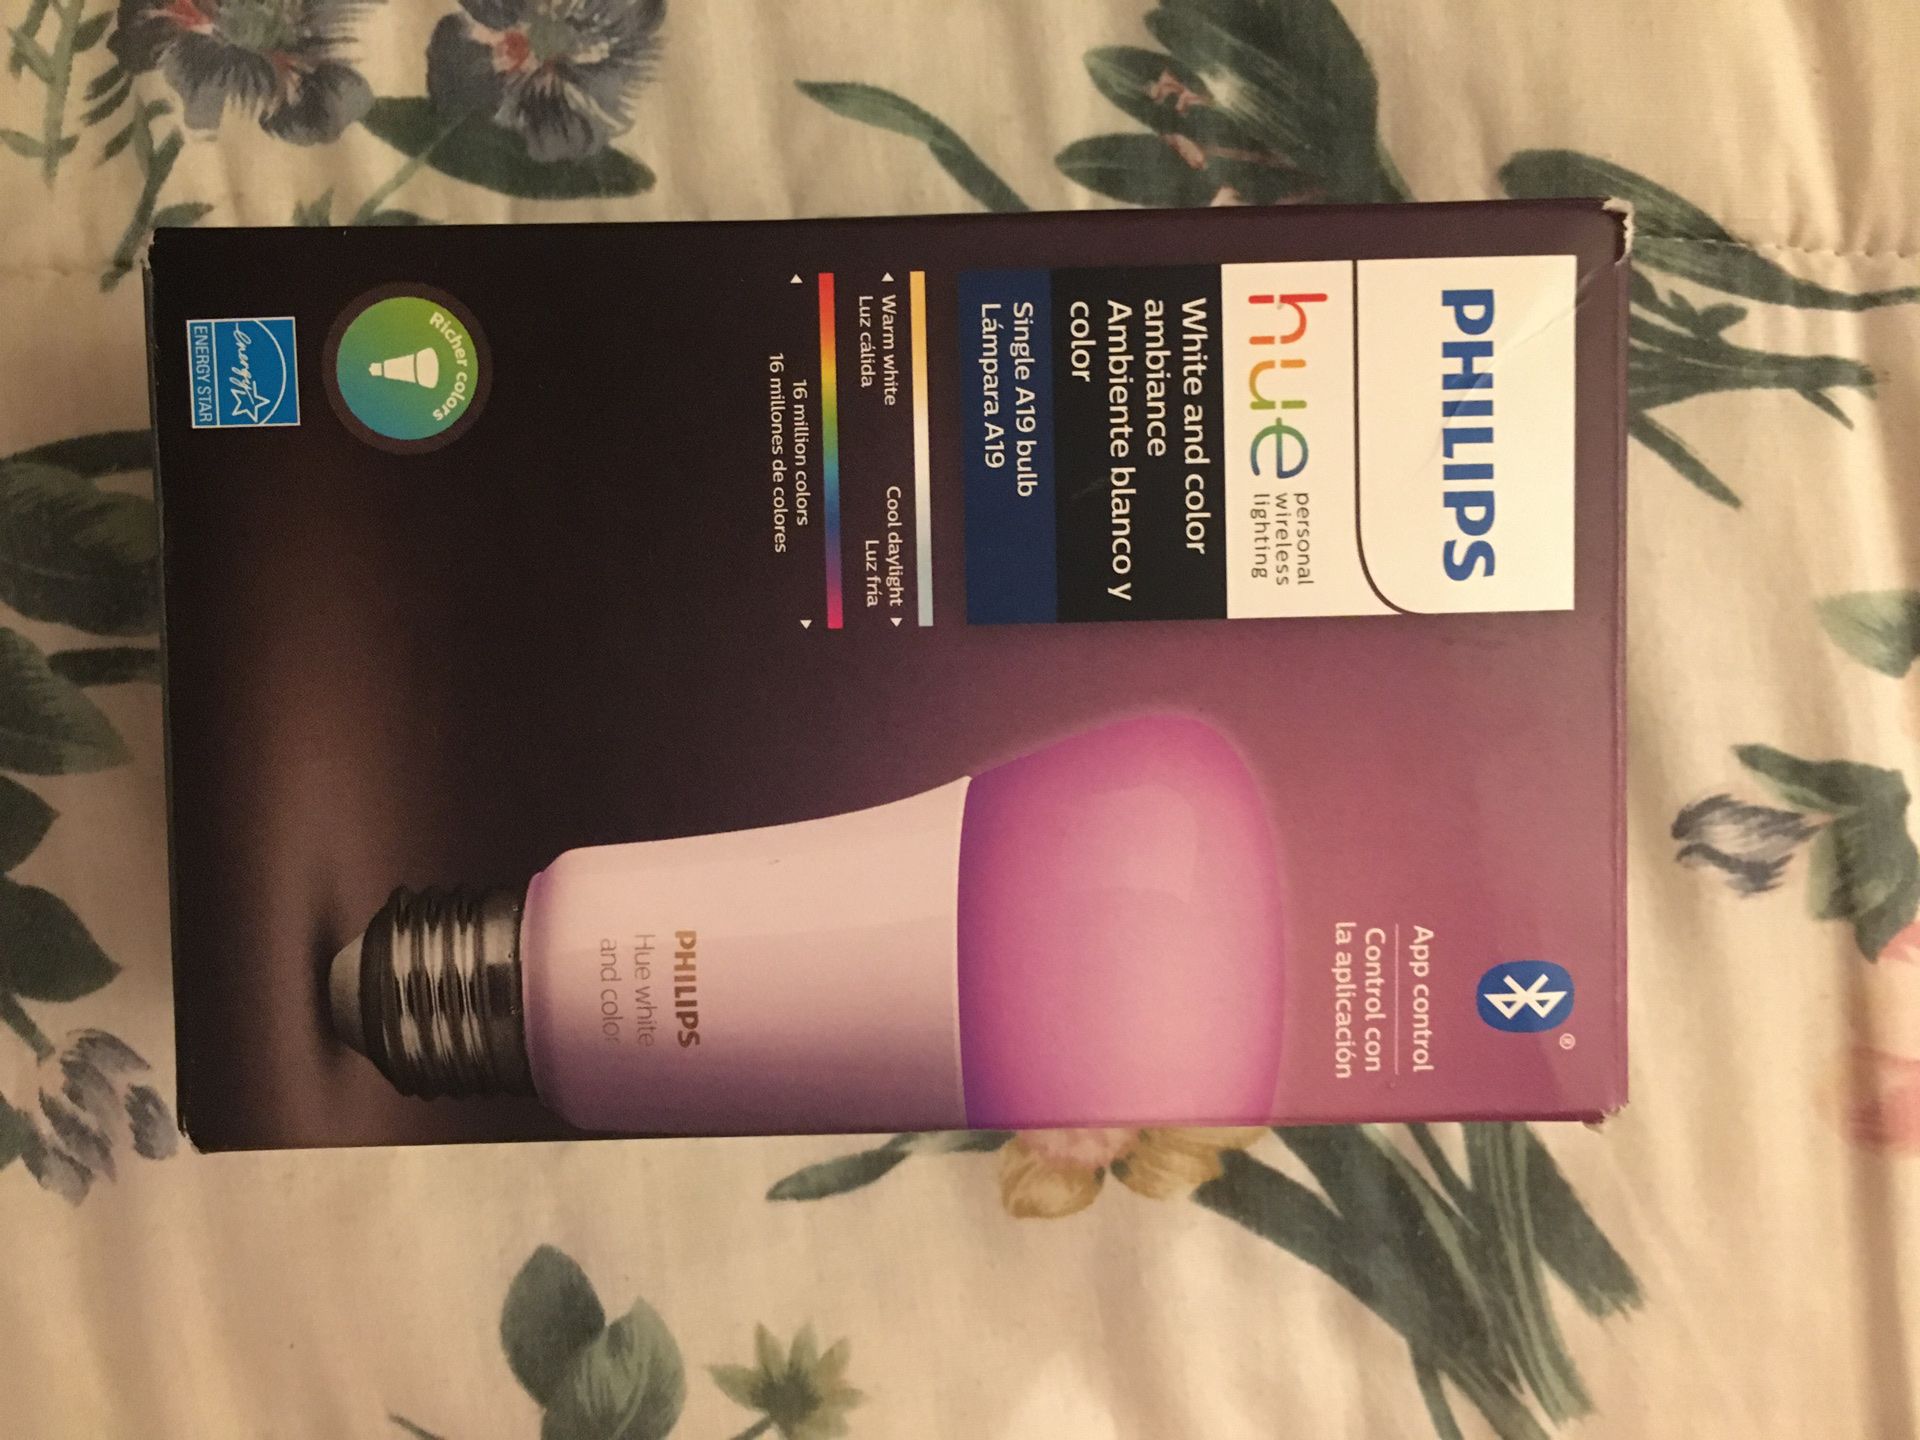 Phillips 16mil color Bluetooth led bulb